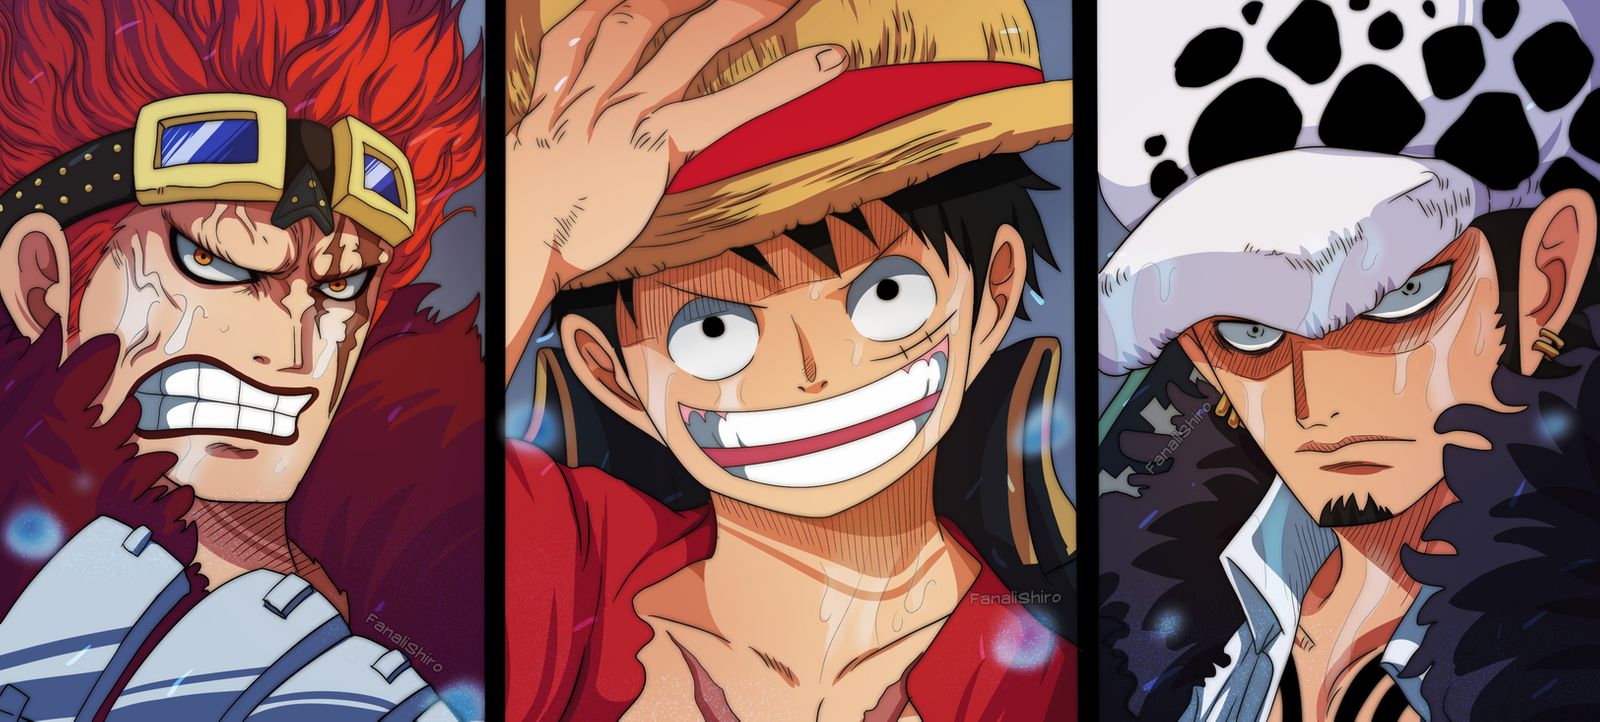 Read One Piece 976 Spoilers One Piece Manga 976 Raw Scans